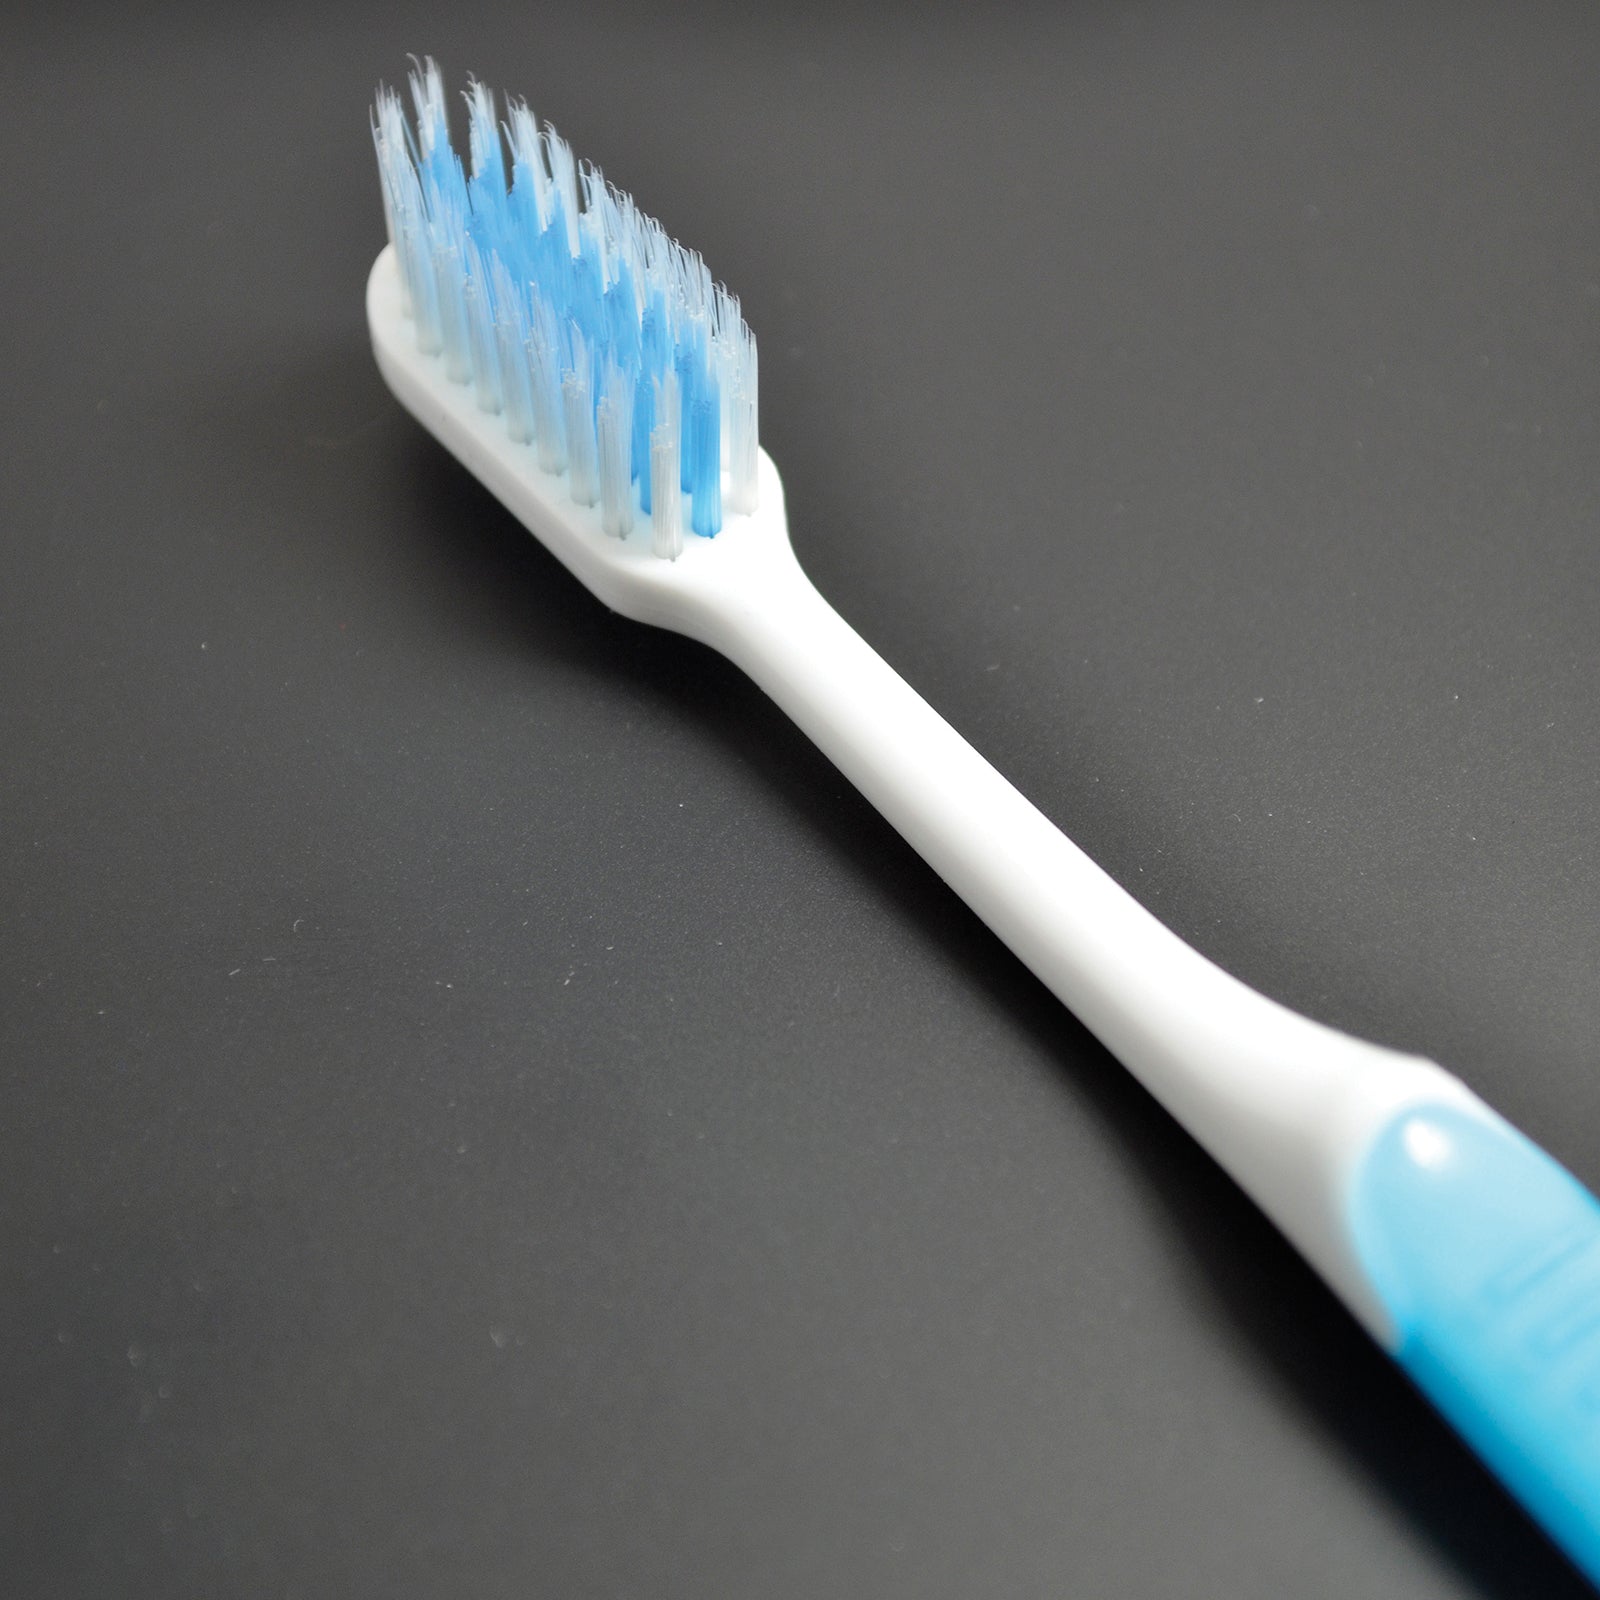 BrushCare Slim Soft Toothbrush Triple Pack